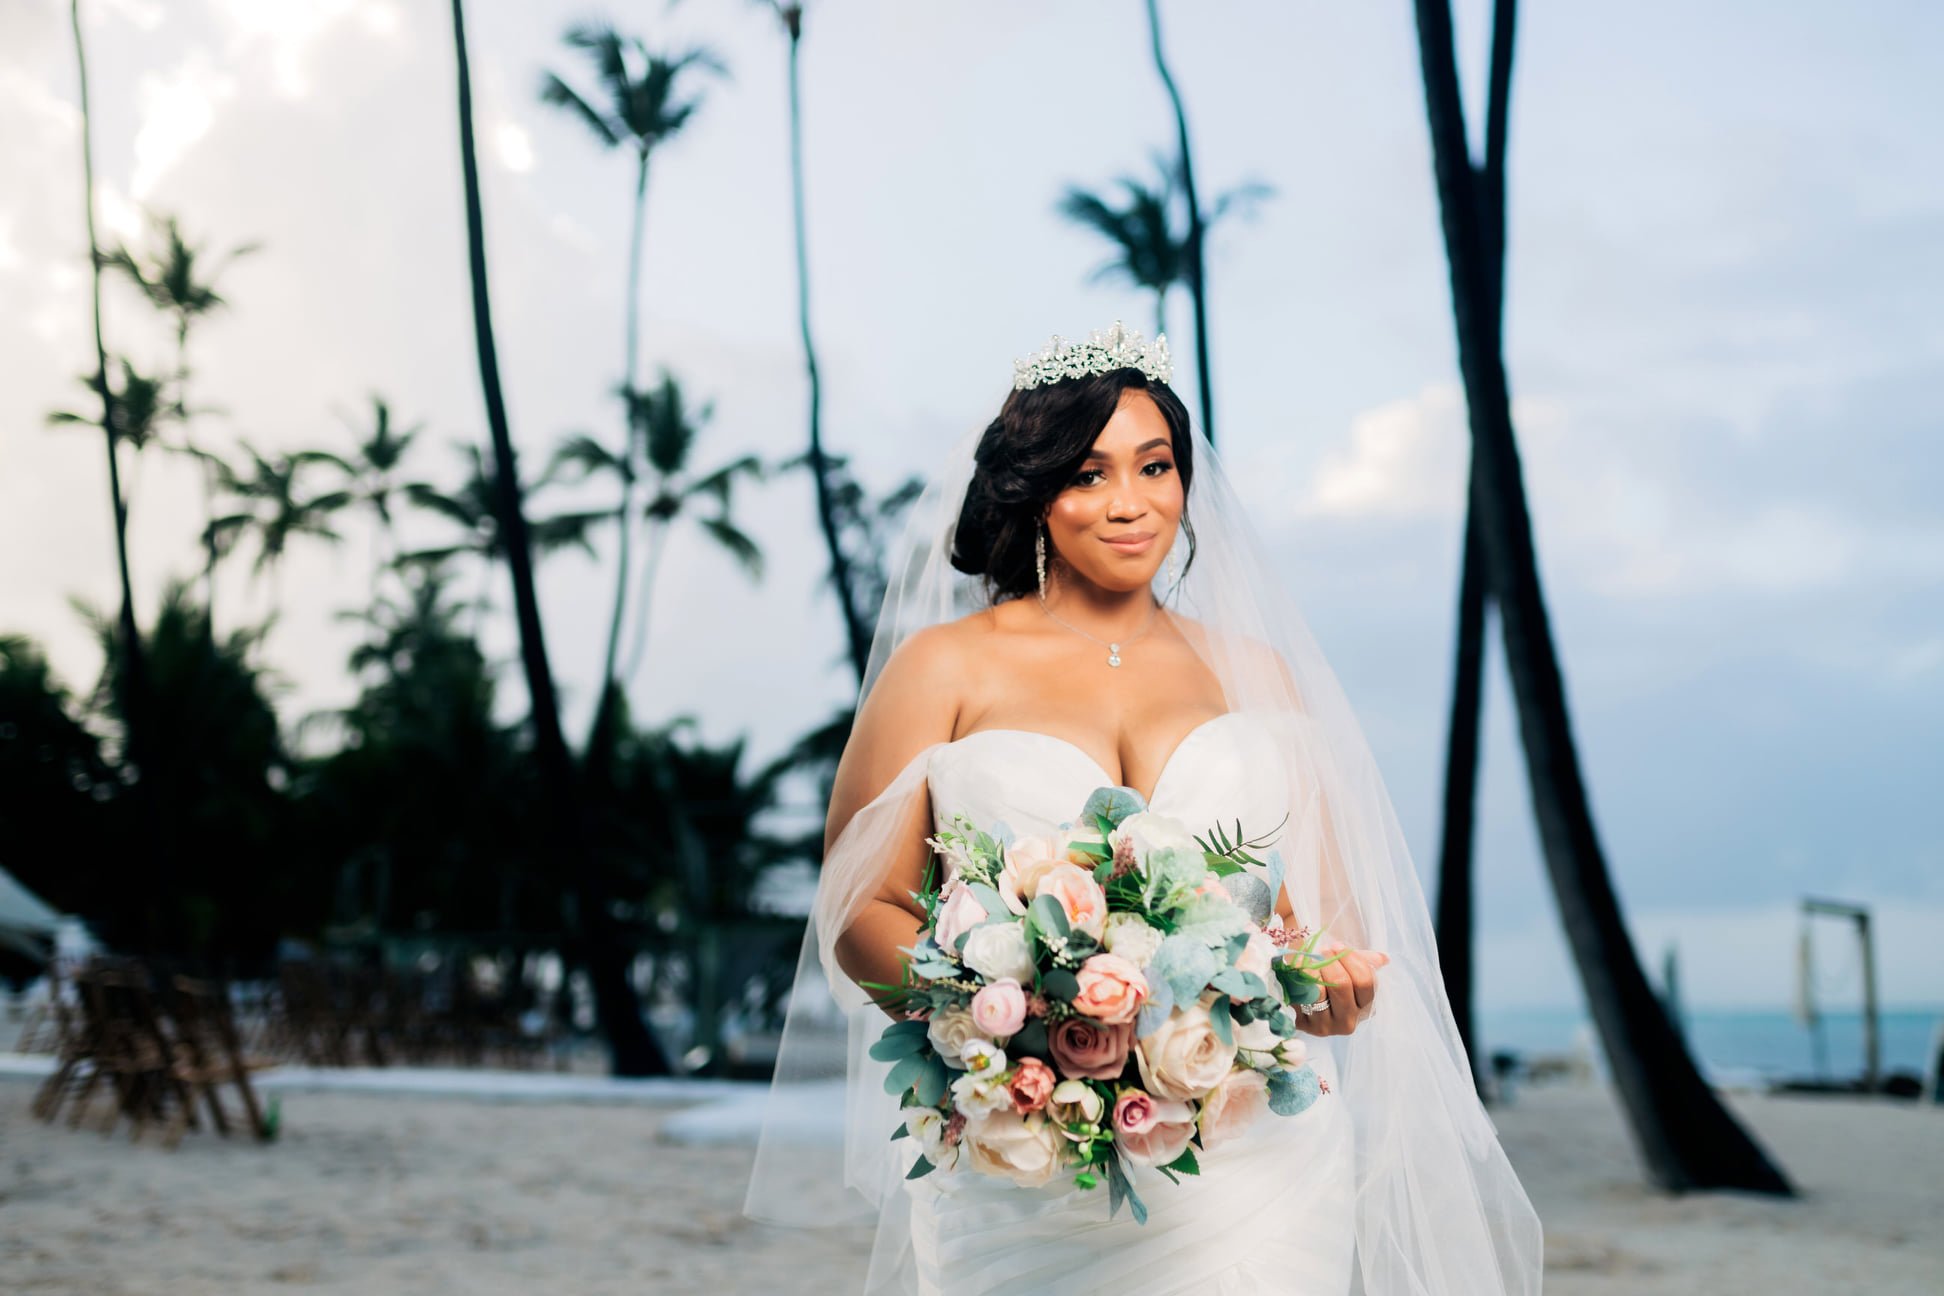 destibride-nicole-how-to-plan-a-destination-wedding-in-punta-cana-dominican-republic-jellyfish-restaurant-royalton-bavaro-resort-black-destination-bride-desti-tv-desti-guide-to-destination-weddings-2021-beach-bride-sunset2.jpg